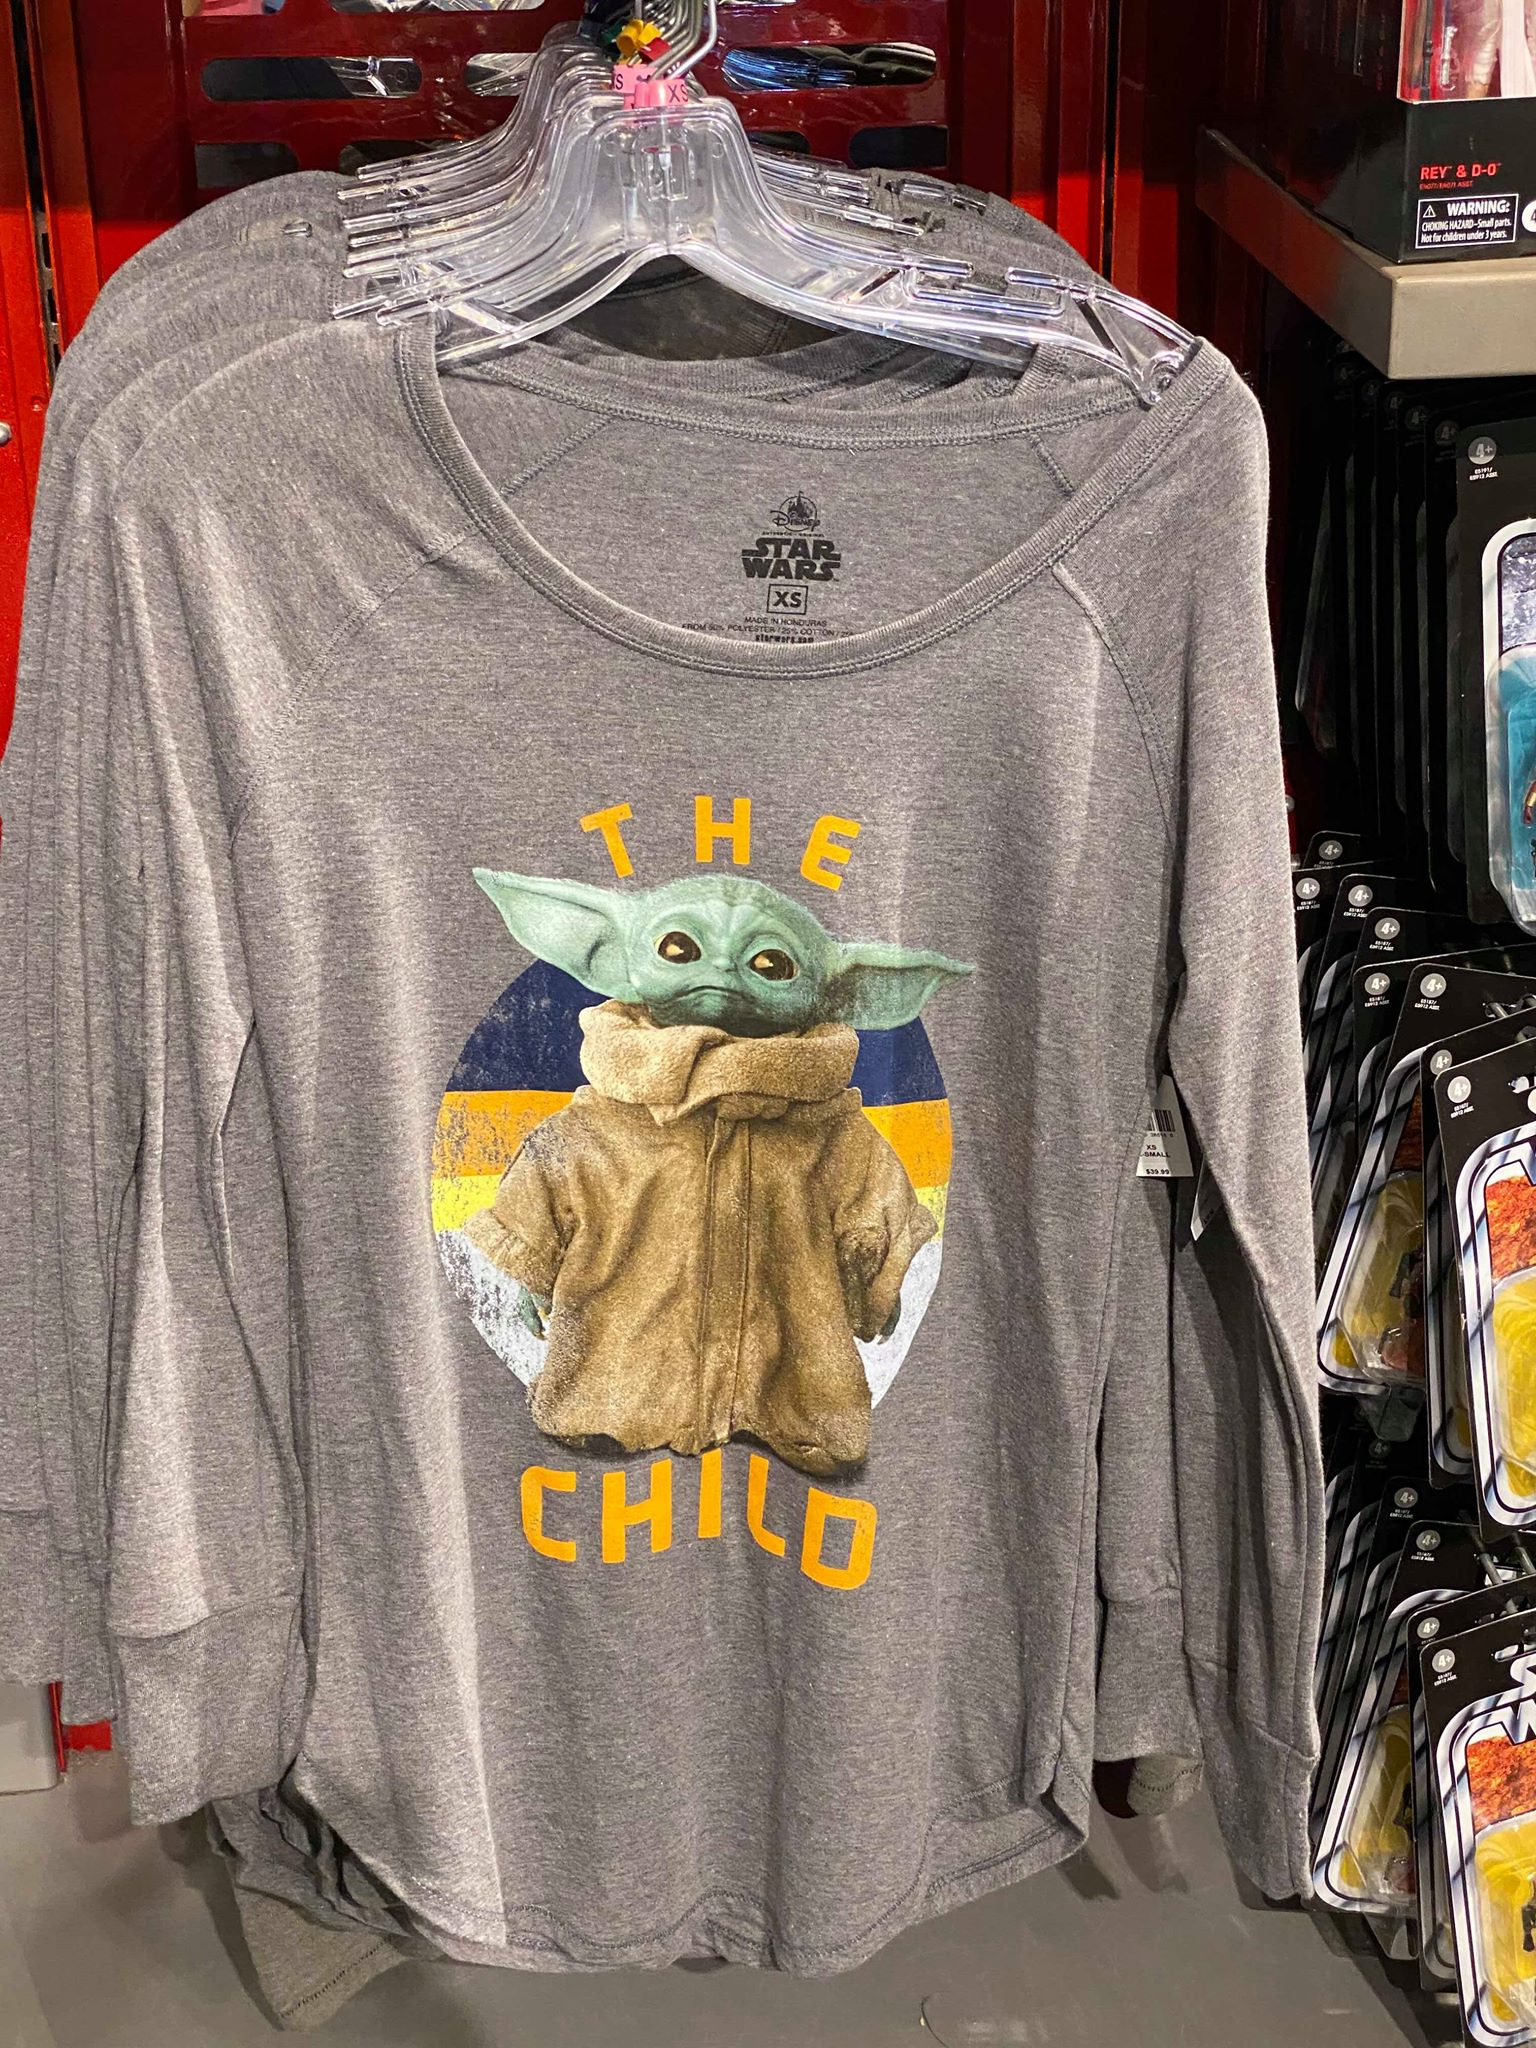 More Baby Yoda Merchandise Hits the Shelves at Walt Disney World ...